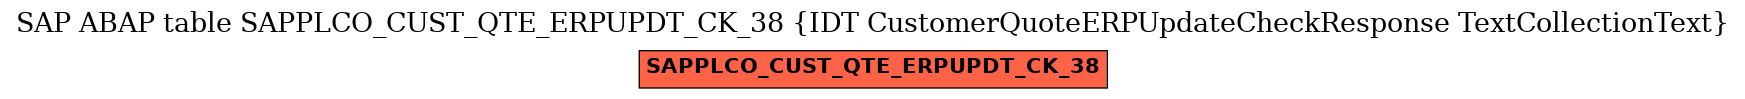 E-R Diagram for table SAPPLCO_CUST_QTE_ERPUPDT_CK_38 (IDT CustomerQuoteERPUpdateCheckResponse TextCollectionText)